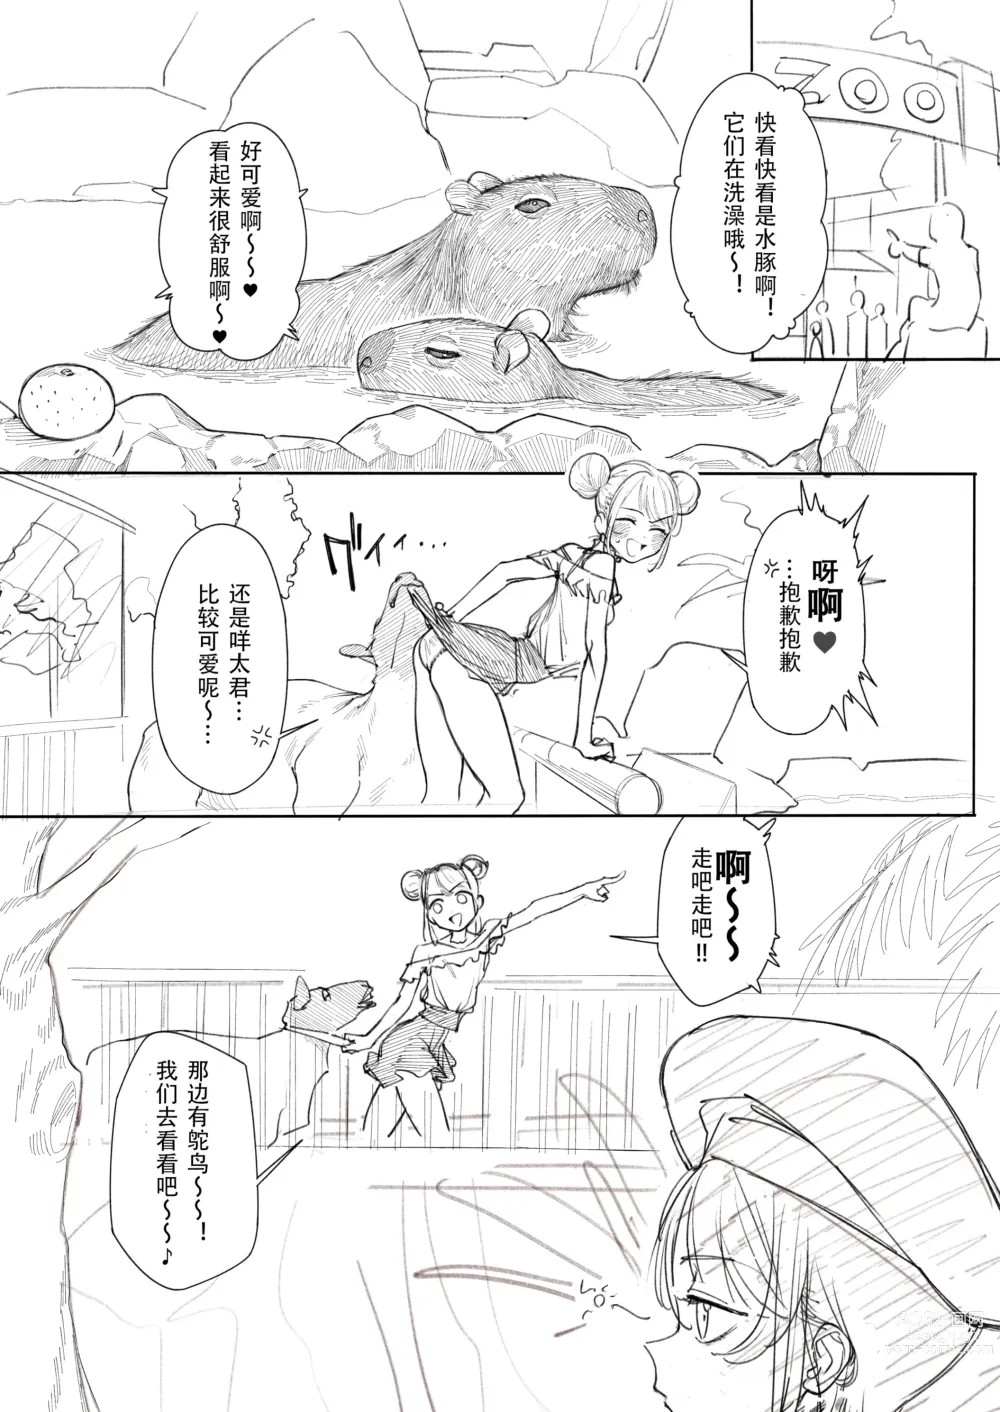 Page 3 of doujinshi Kangaroo no Kimochi Ii